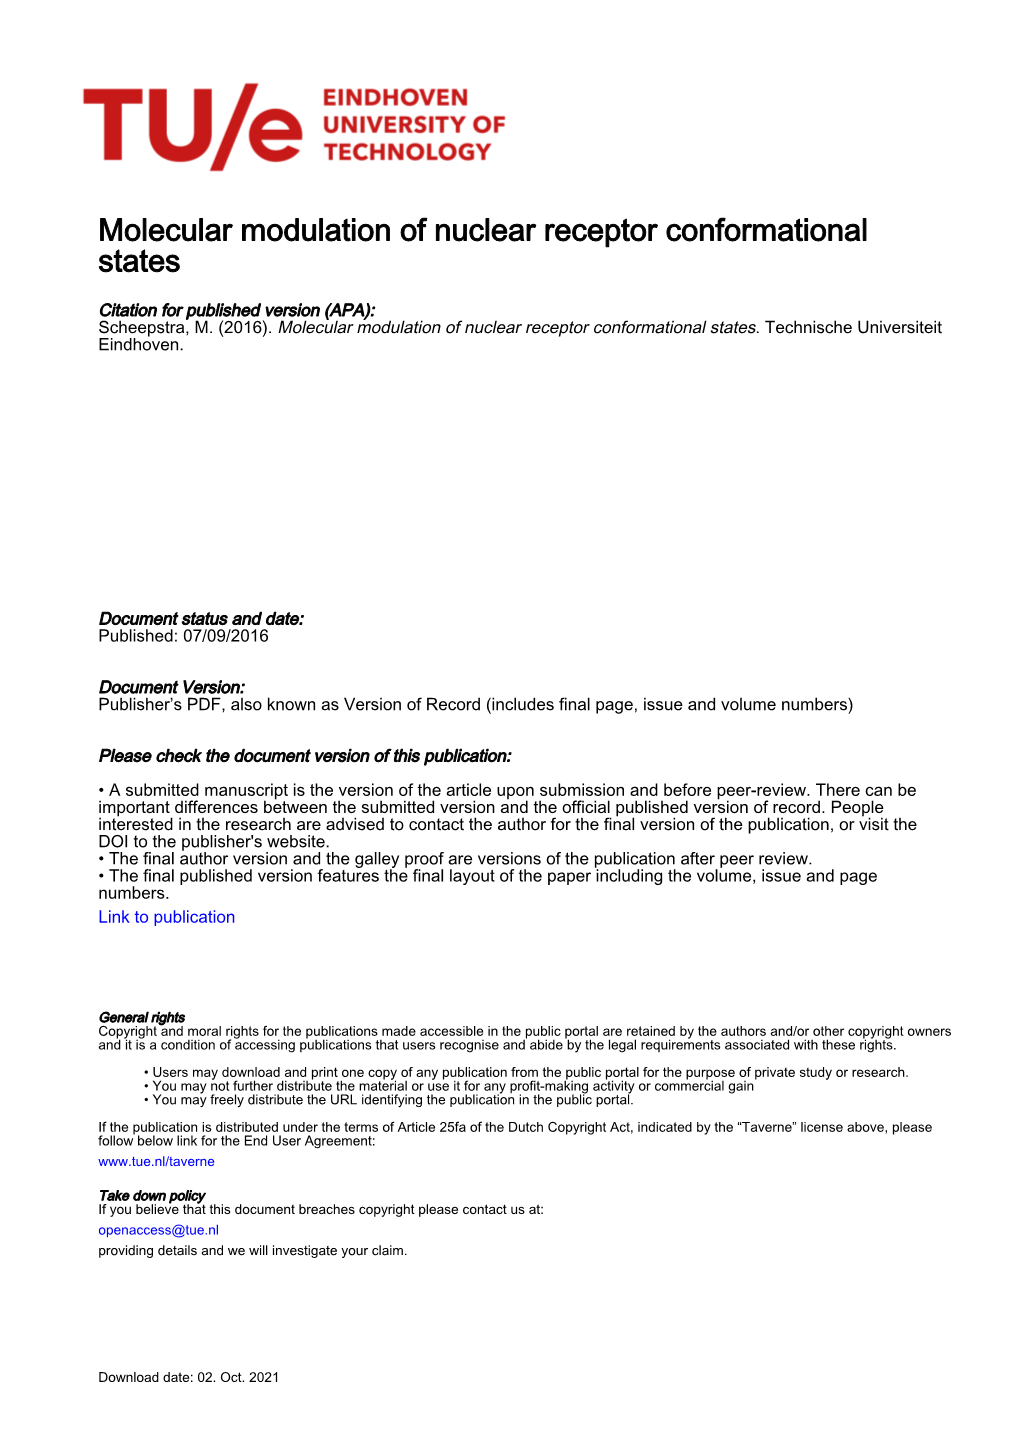 Molecular Modulation of Nuclear Receptor Conformational States